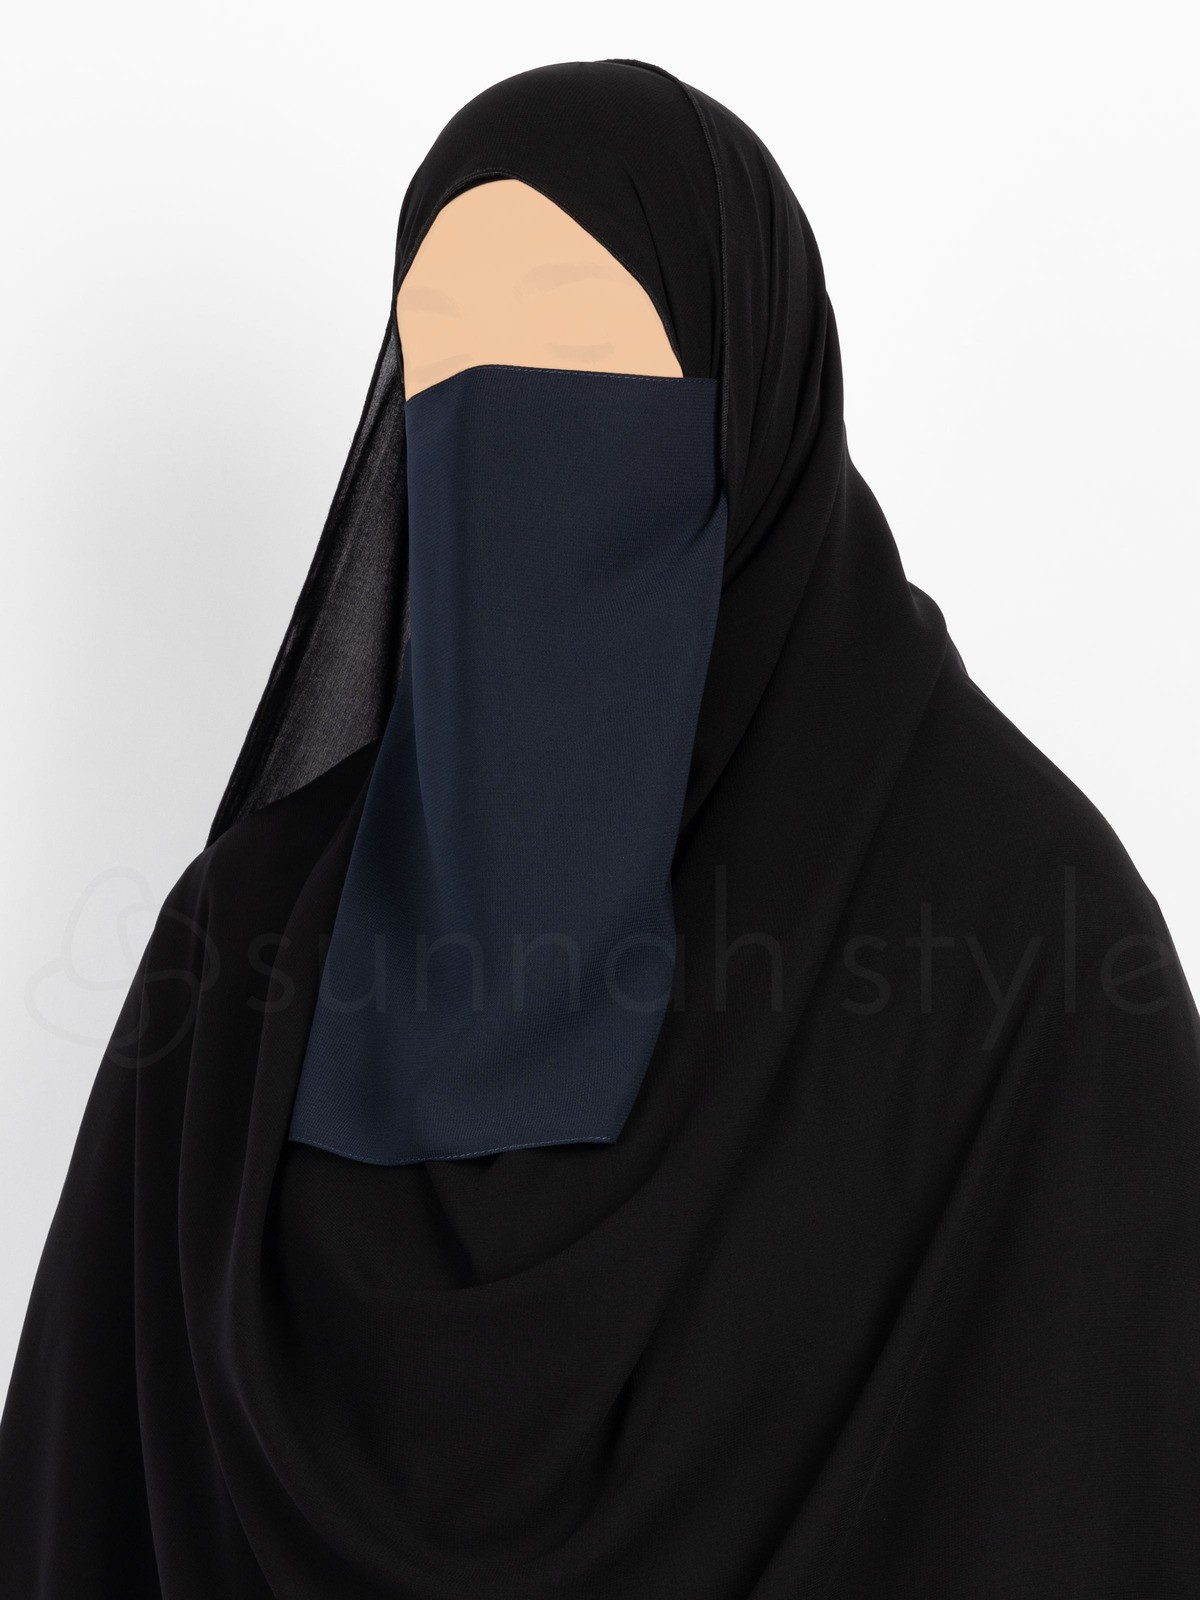 Sunnah Style - Elastic Half Niqab (Navy Blue)